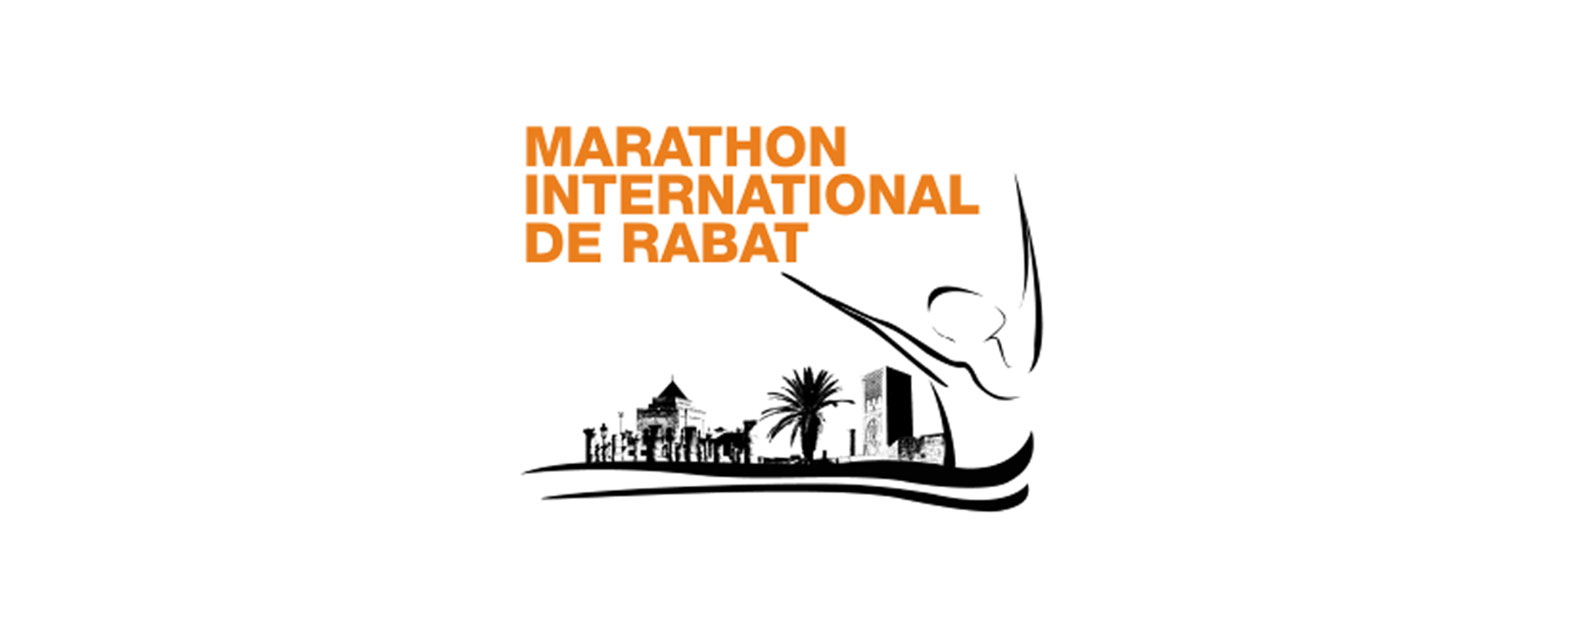 A Maratona International de Rabat